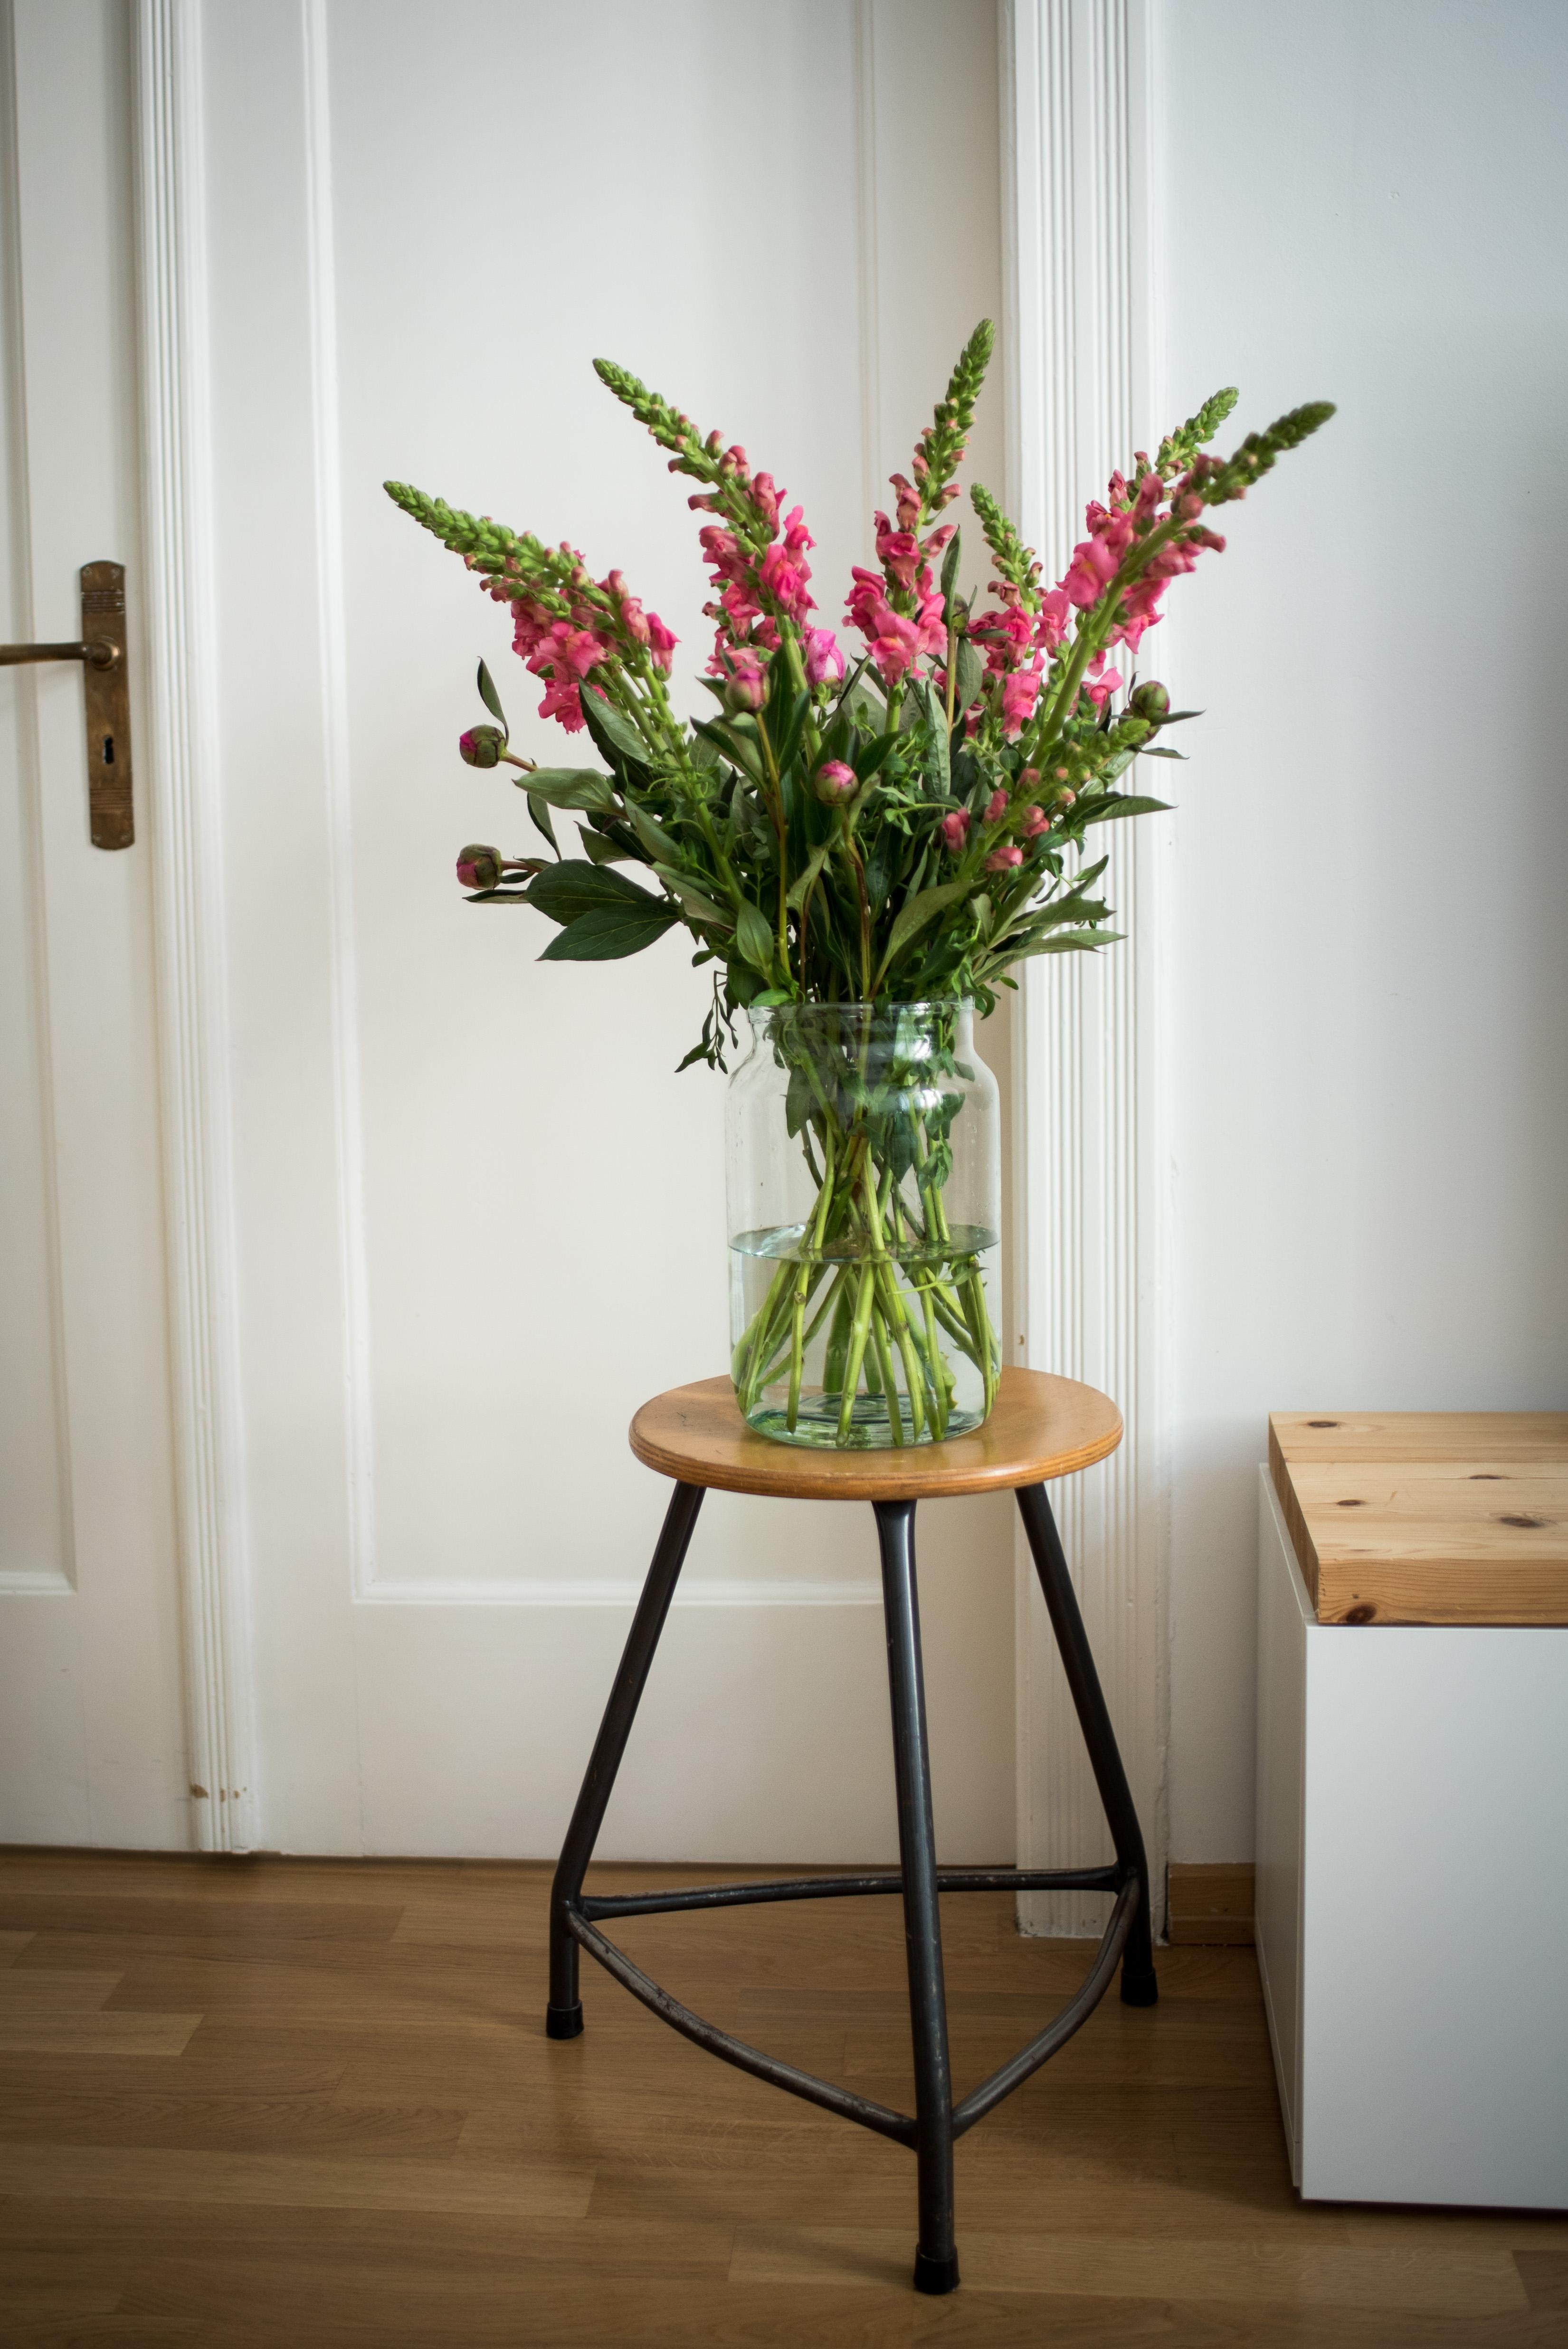 Fridayflowers! #flowers #freshflowers #dekoinspo #vase #vintage #altbau